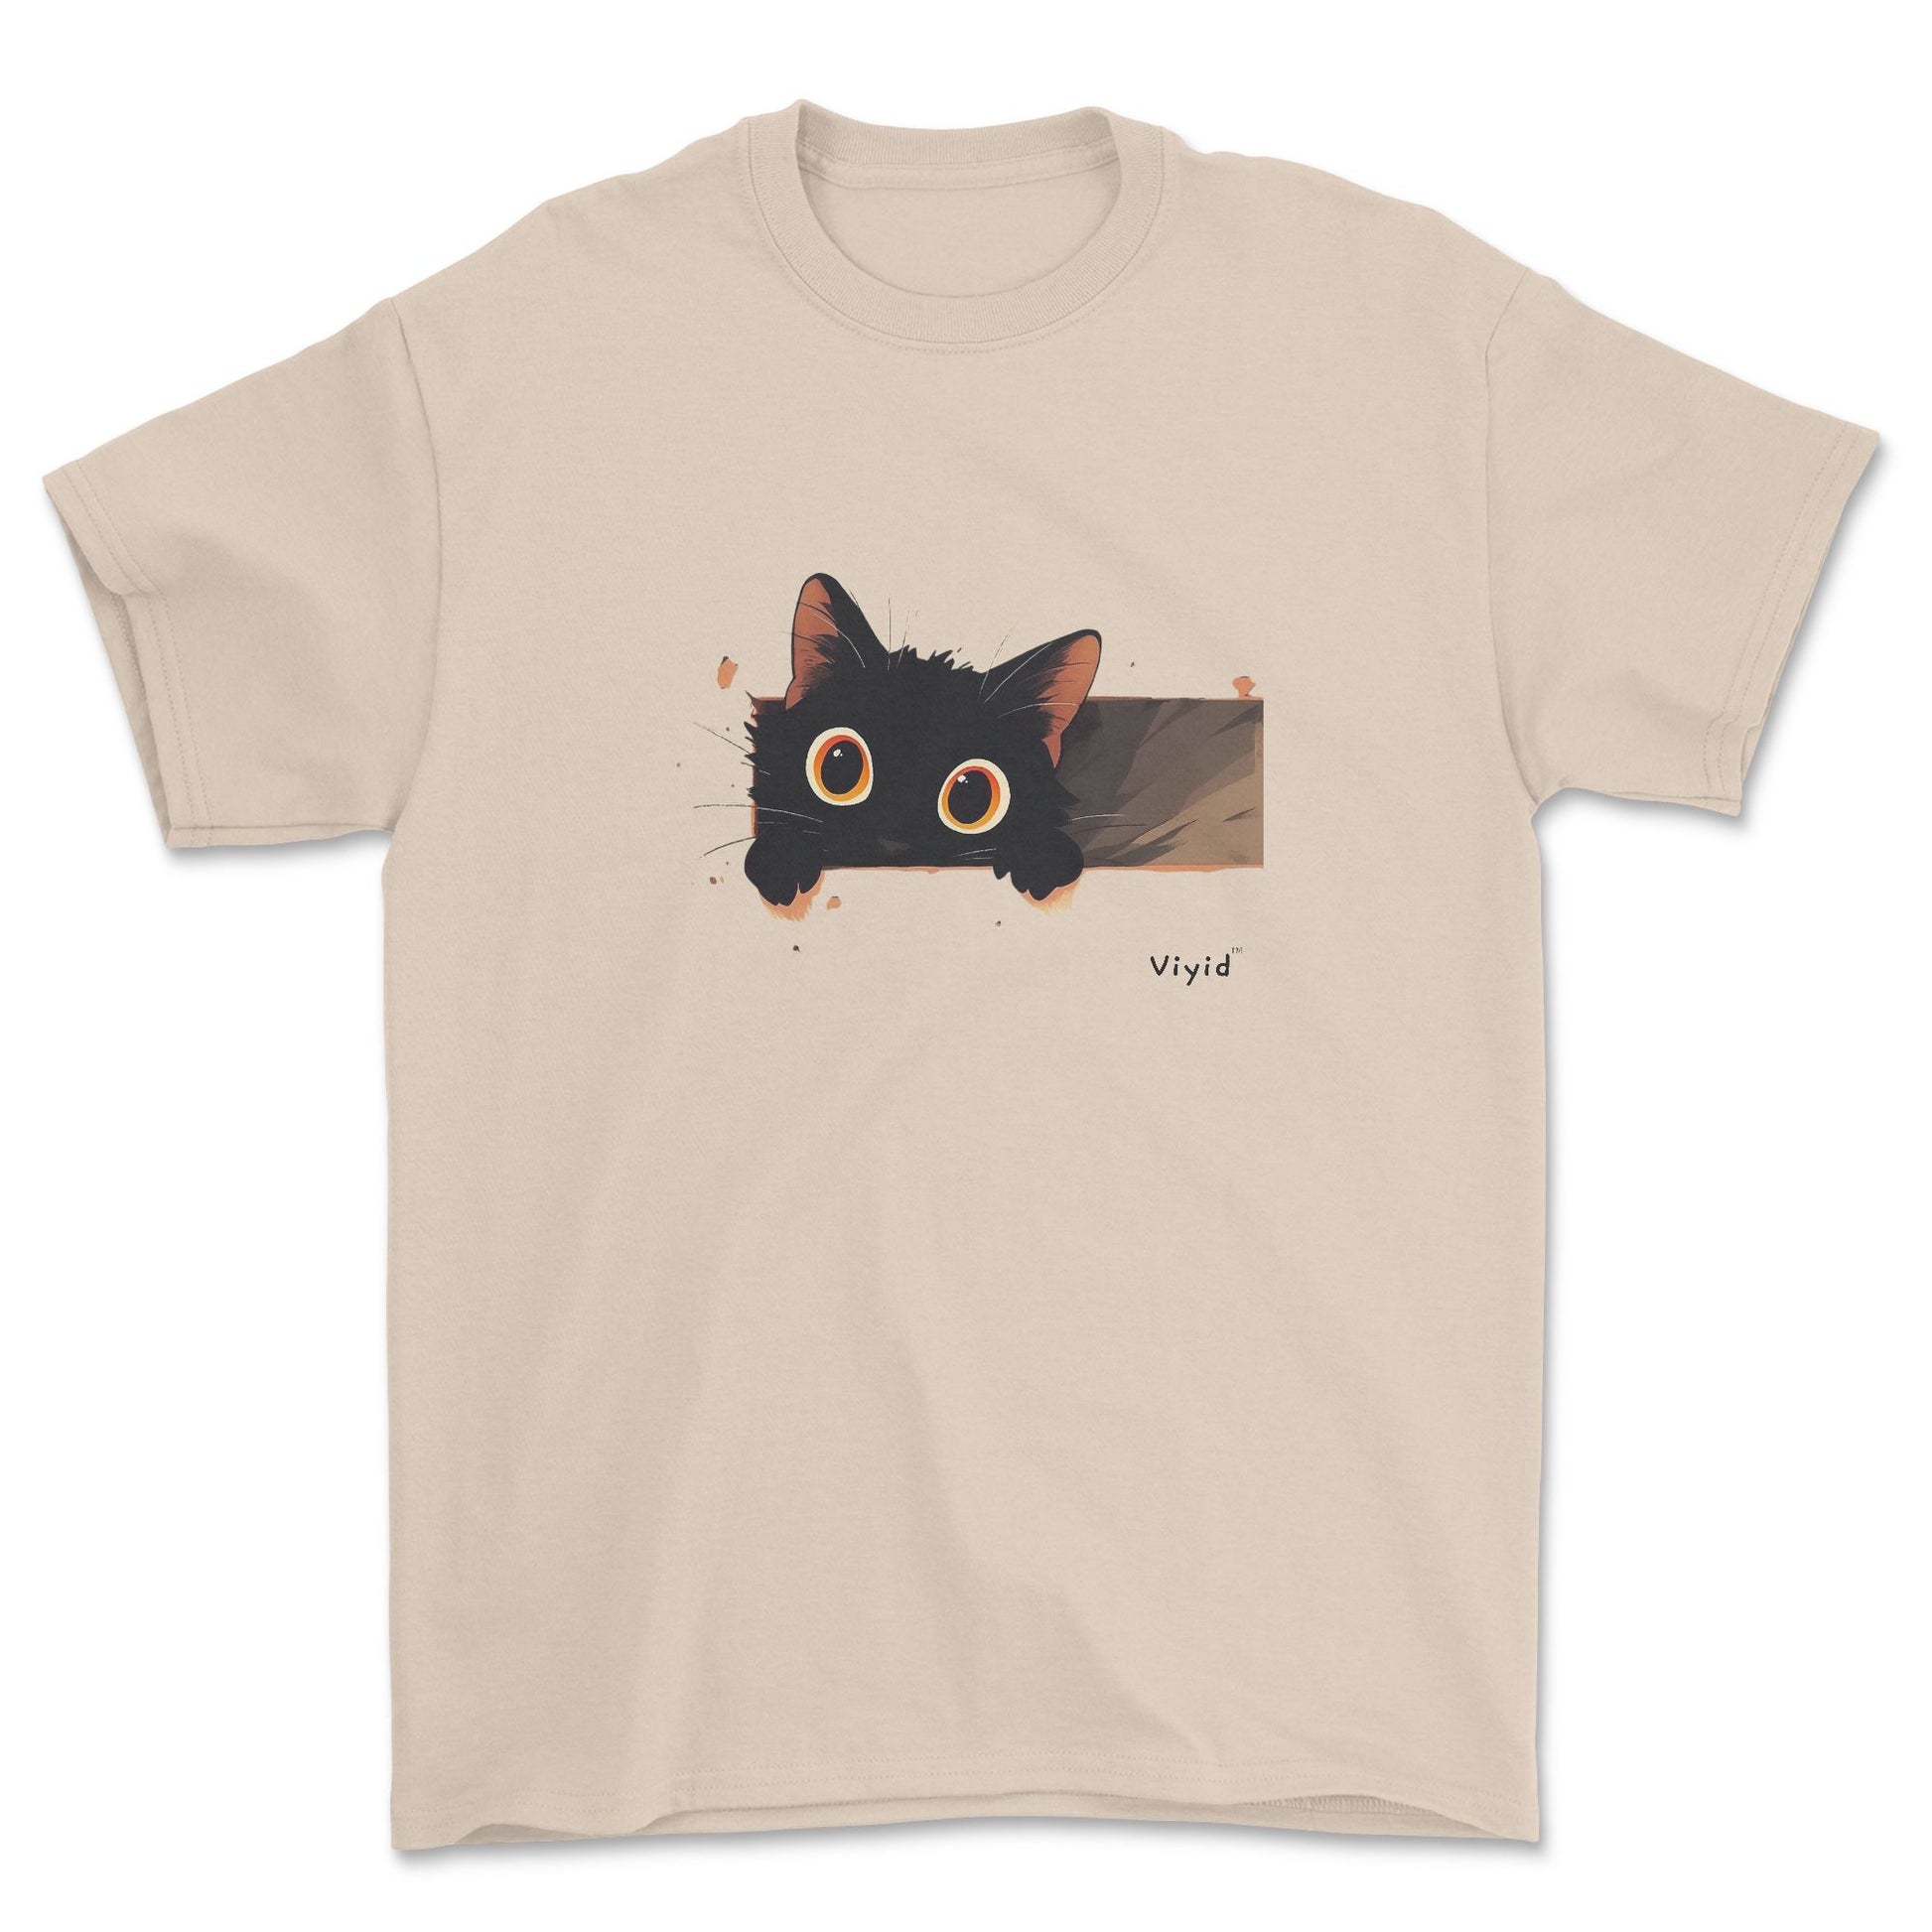 Peeping black cat adult t-shirt sand.